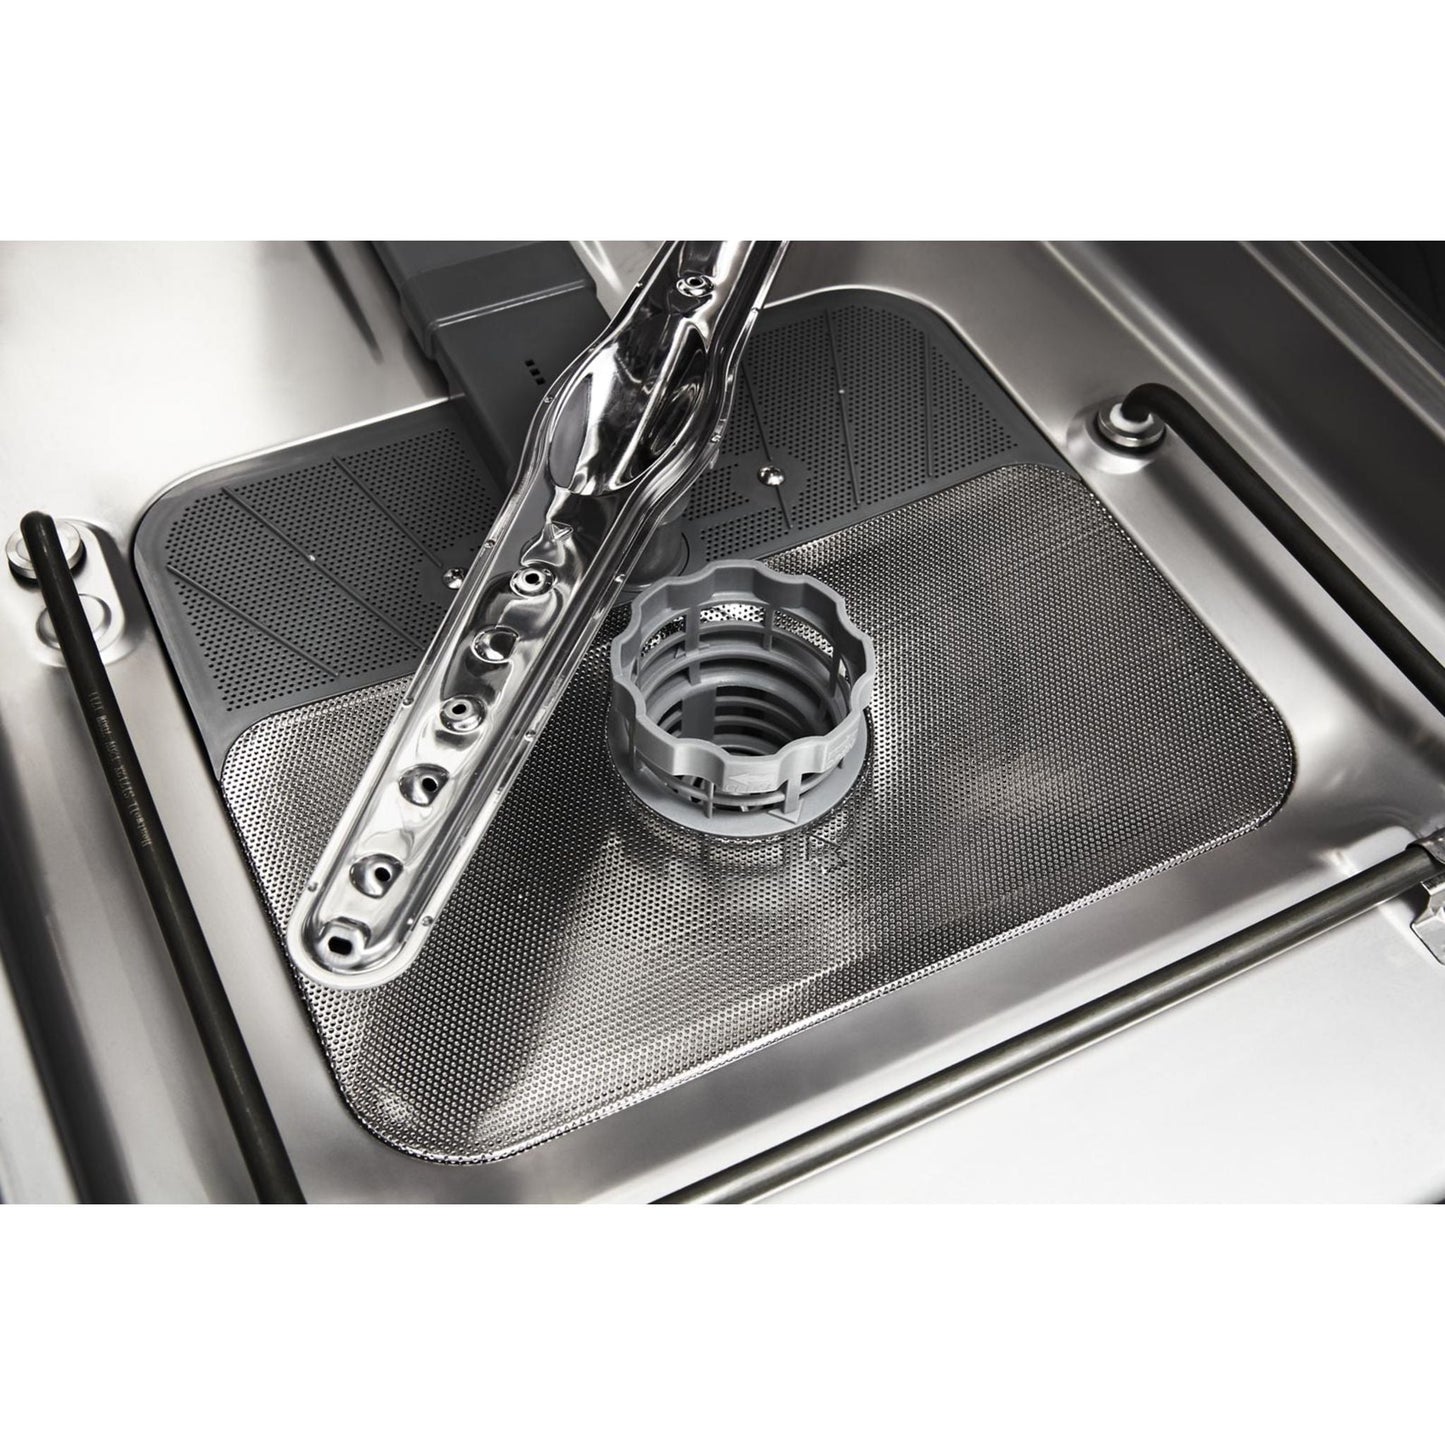 Whirlpool Dishwasher Stainless Steel Tub (WDF518SAHB) - Black